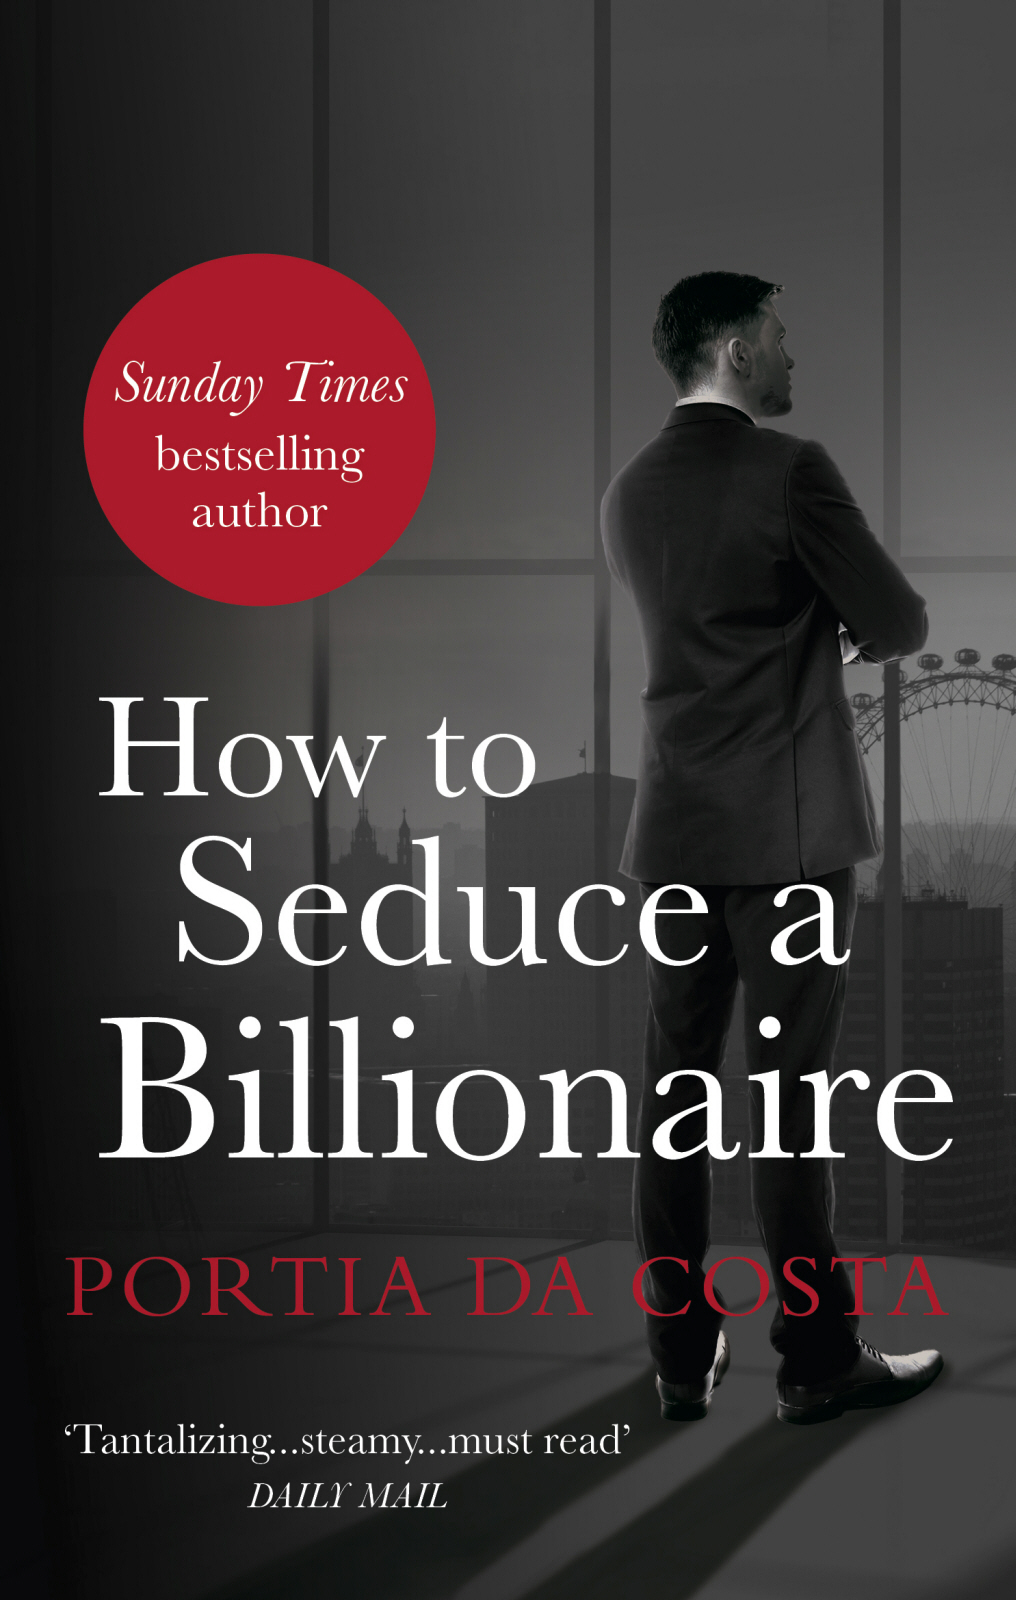 How to Seduce a Billionaire by Portia Da Costa